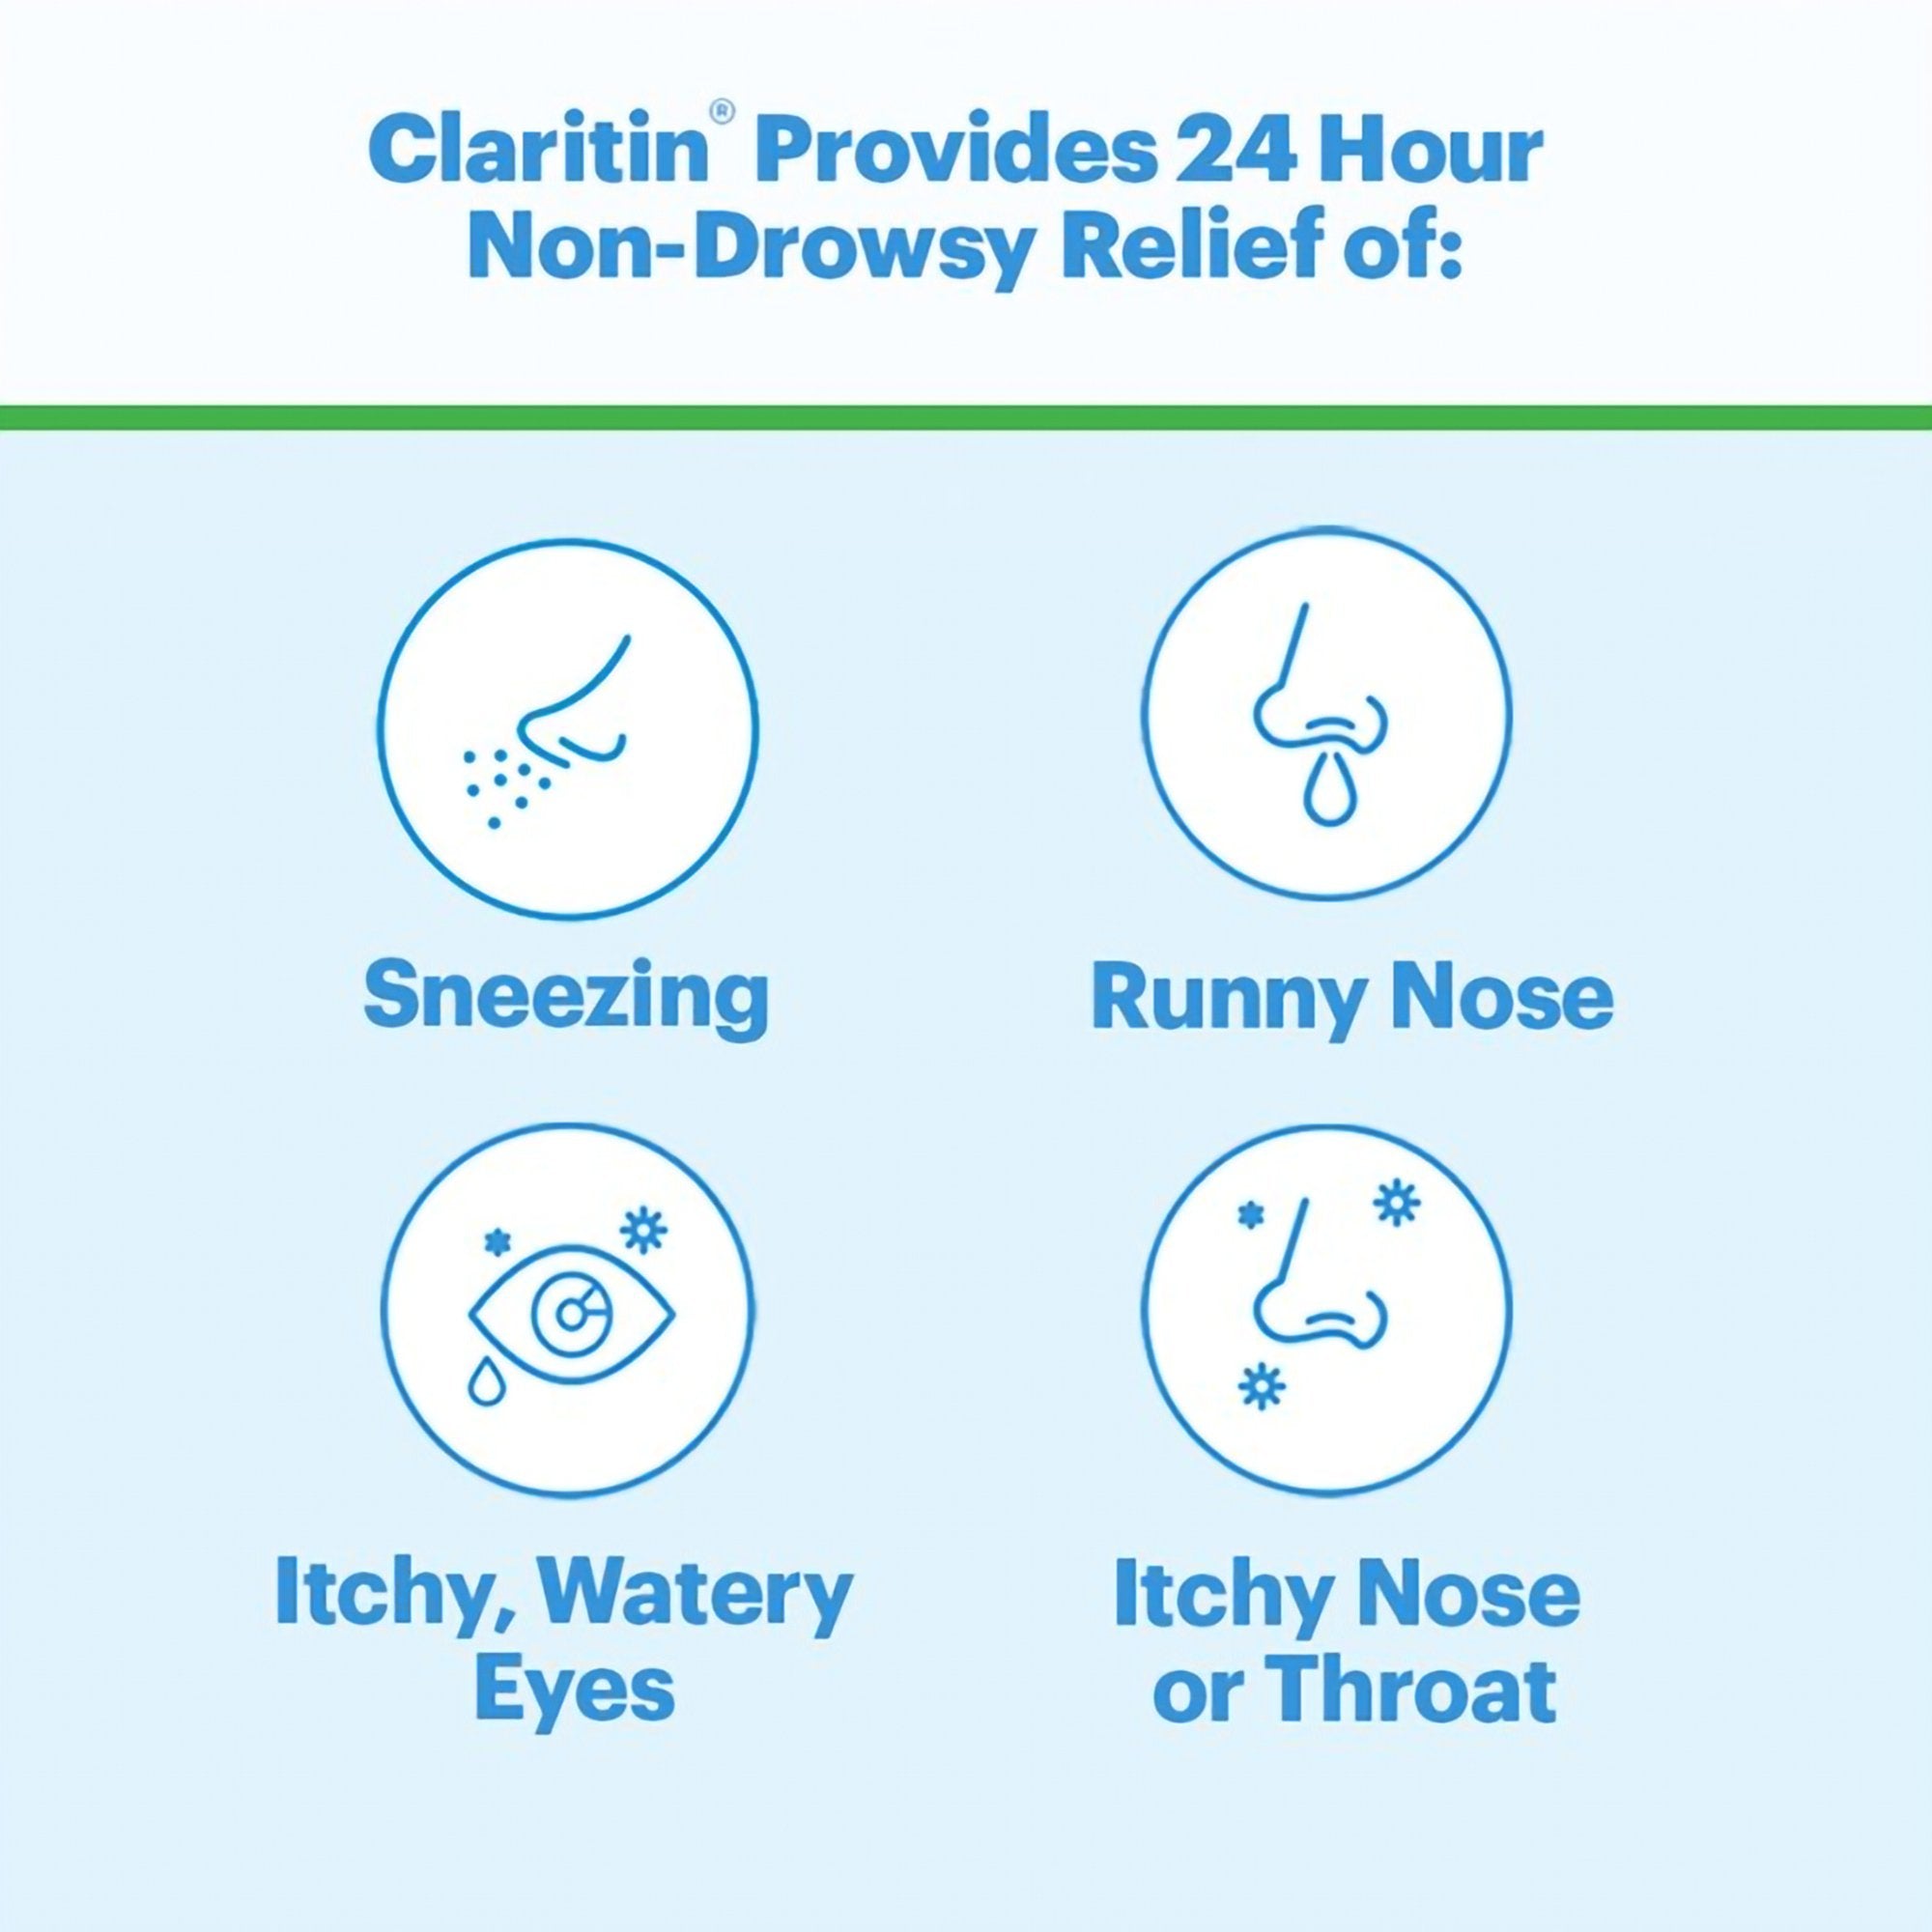 Allergy Relief Claritin® Liquigels® 10 mg Strength Tablet 30 per Box